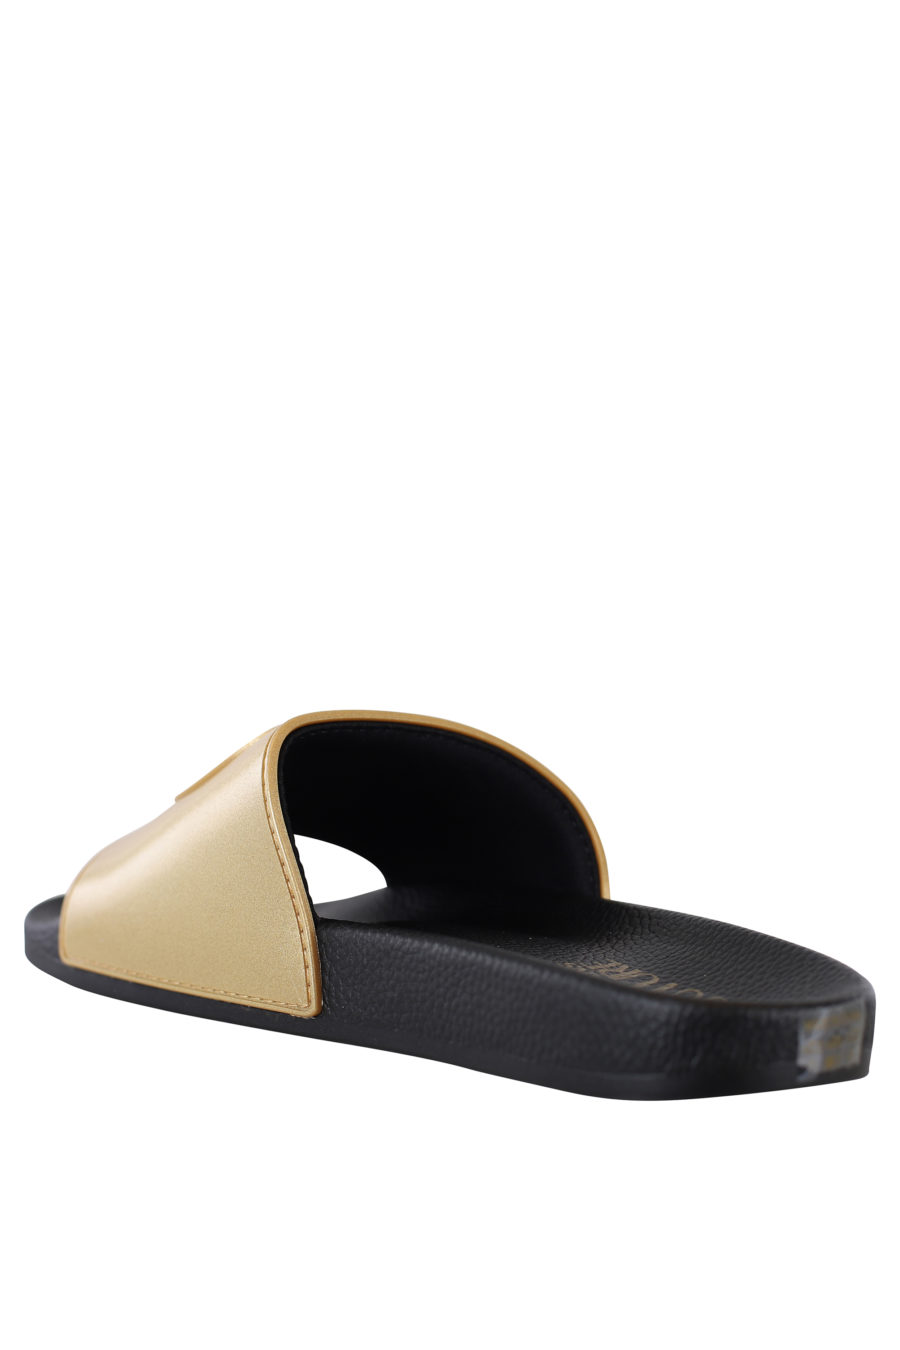 Gold and black flip flops - IMG 2189 3